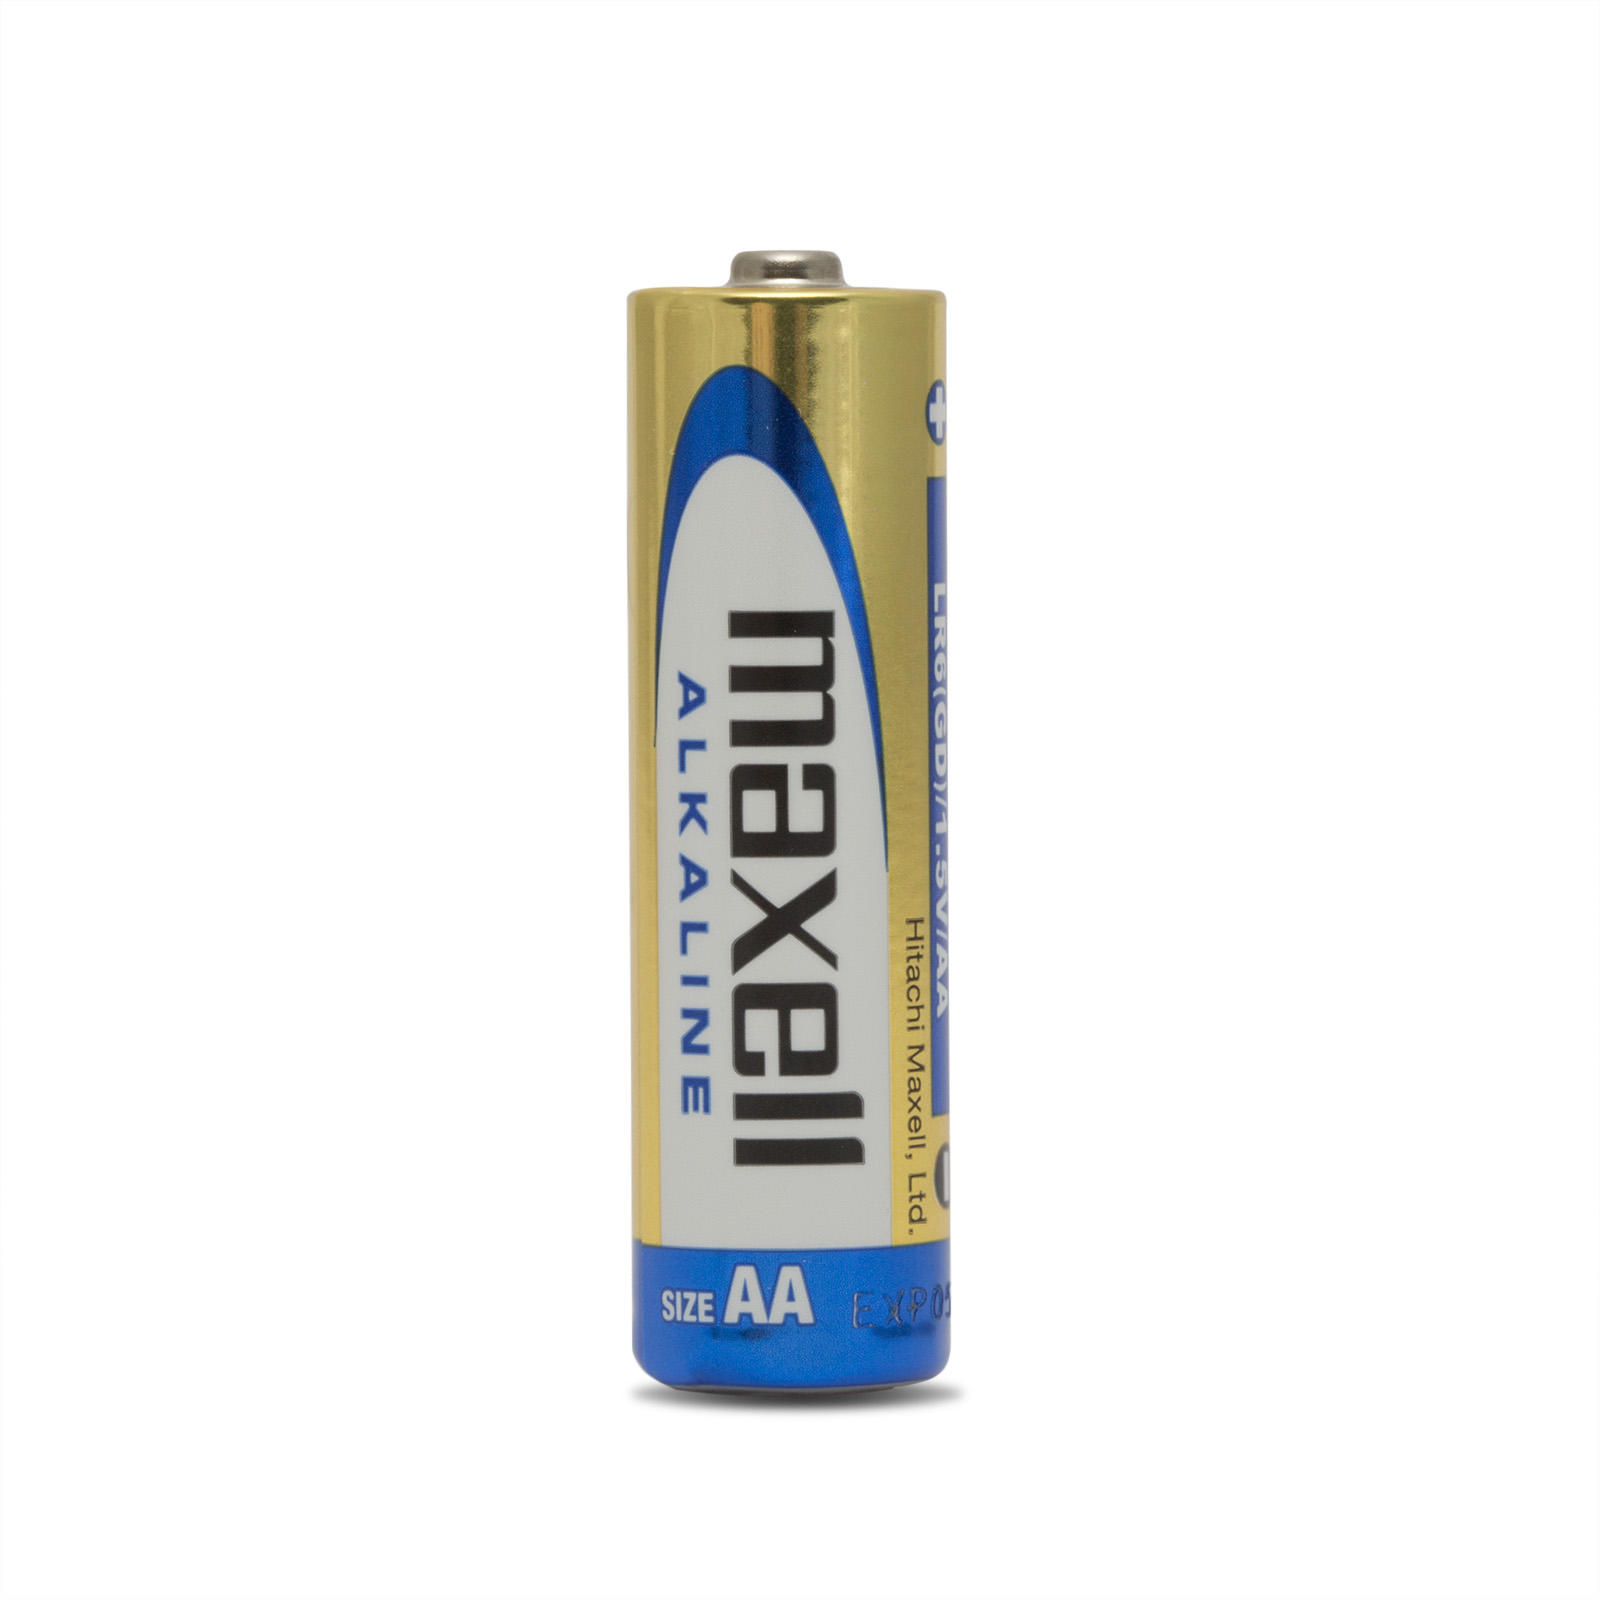 Элемент питания lr6 aa. Батарейка Maxell lr6 AA Shrink 4 Alkaline 1.5v (4/40/800). Батарейки Maxell Alkaline AA. Элемент питания lr06 AA. Батарейки Maxell Alkaline AA аккумулятор.